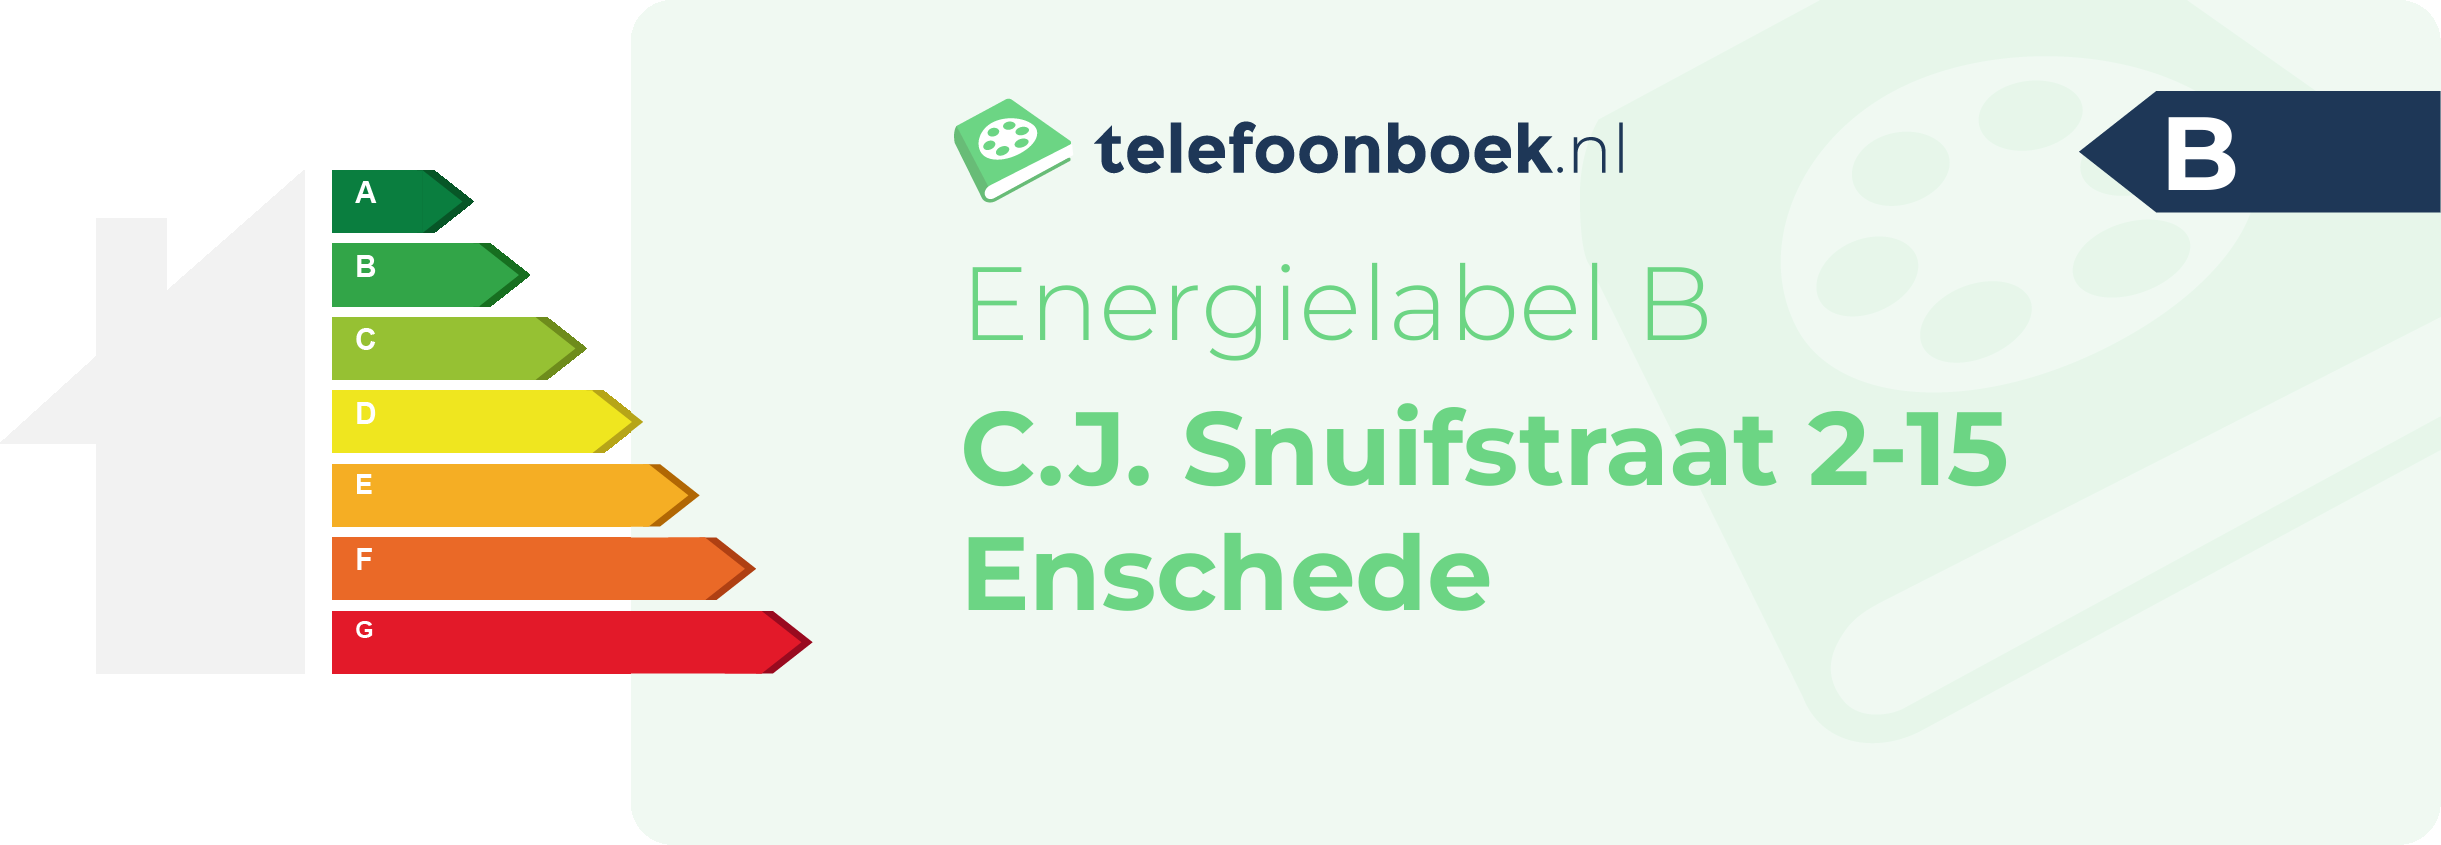 Energielabel C.J. Snuifstraat 2-15 Enschede